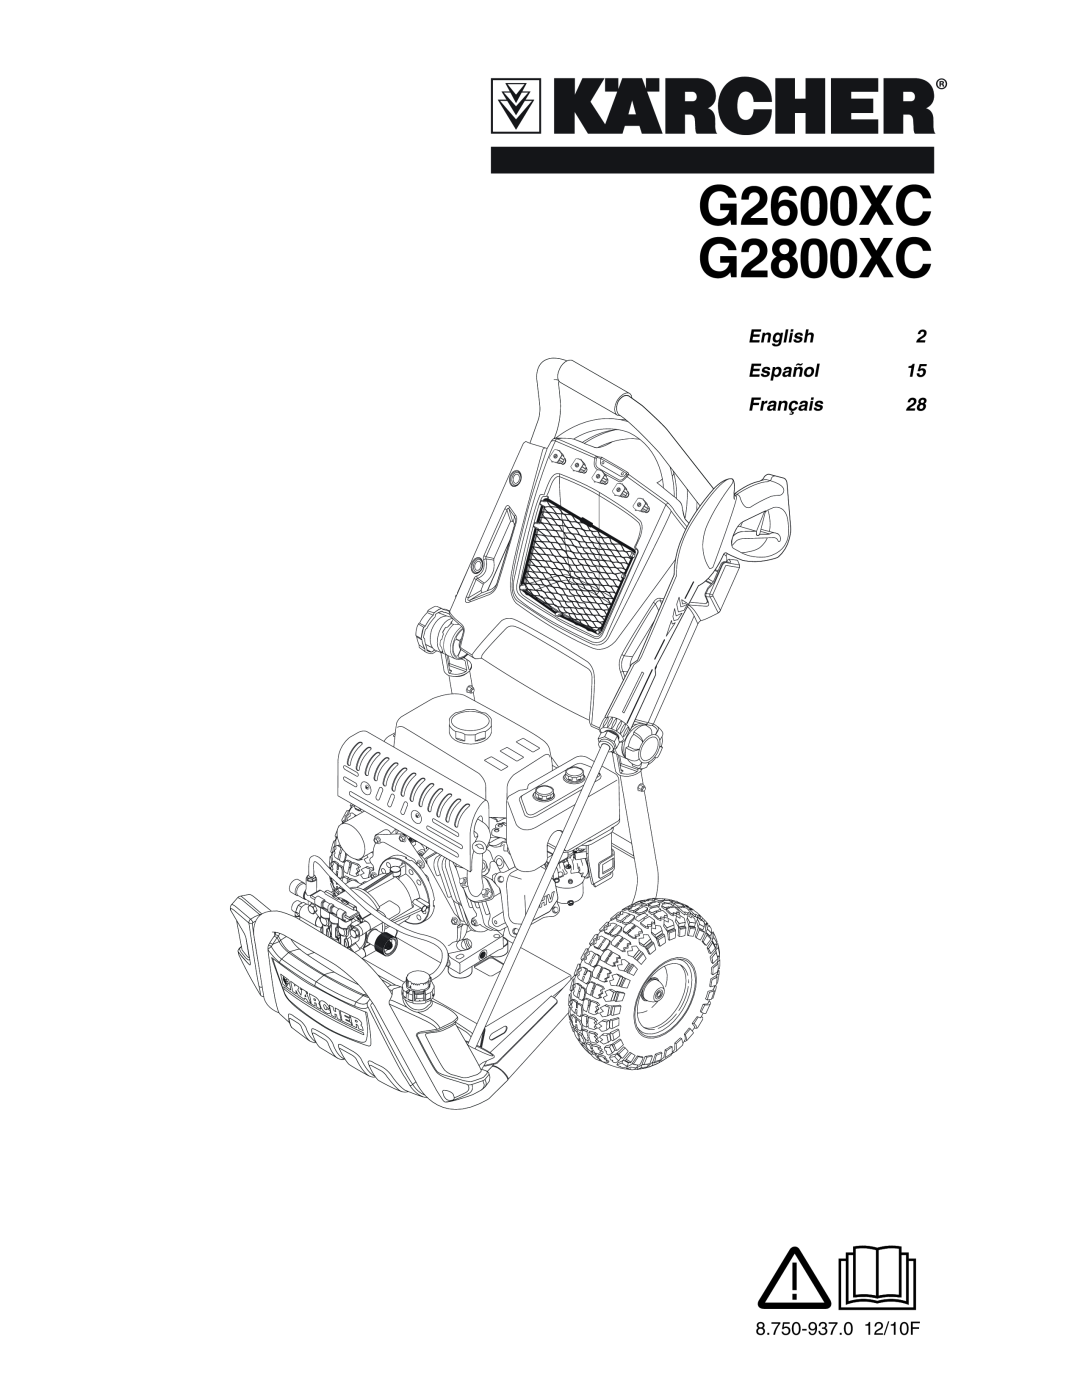 Karcher manual G2600XC G2800XC, English2 Español15 Français28 